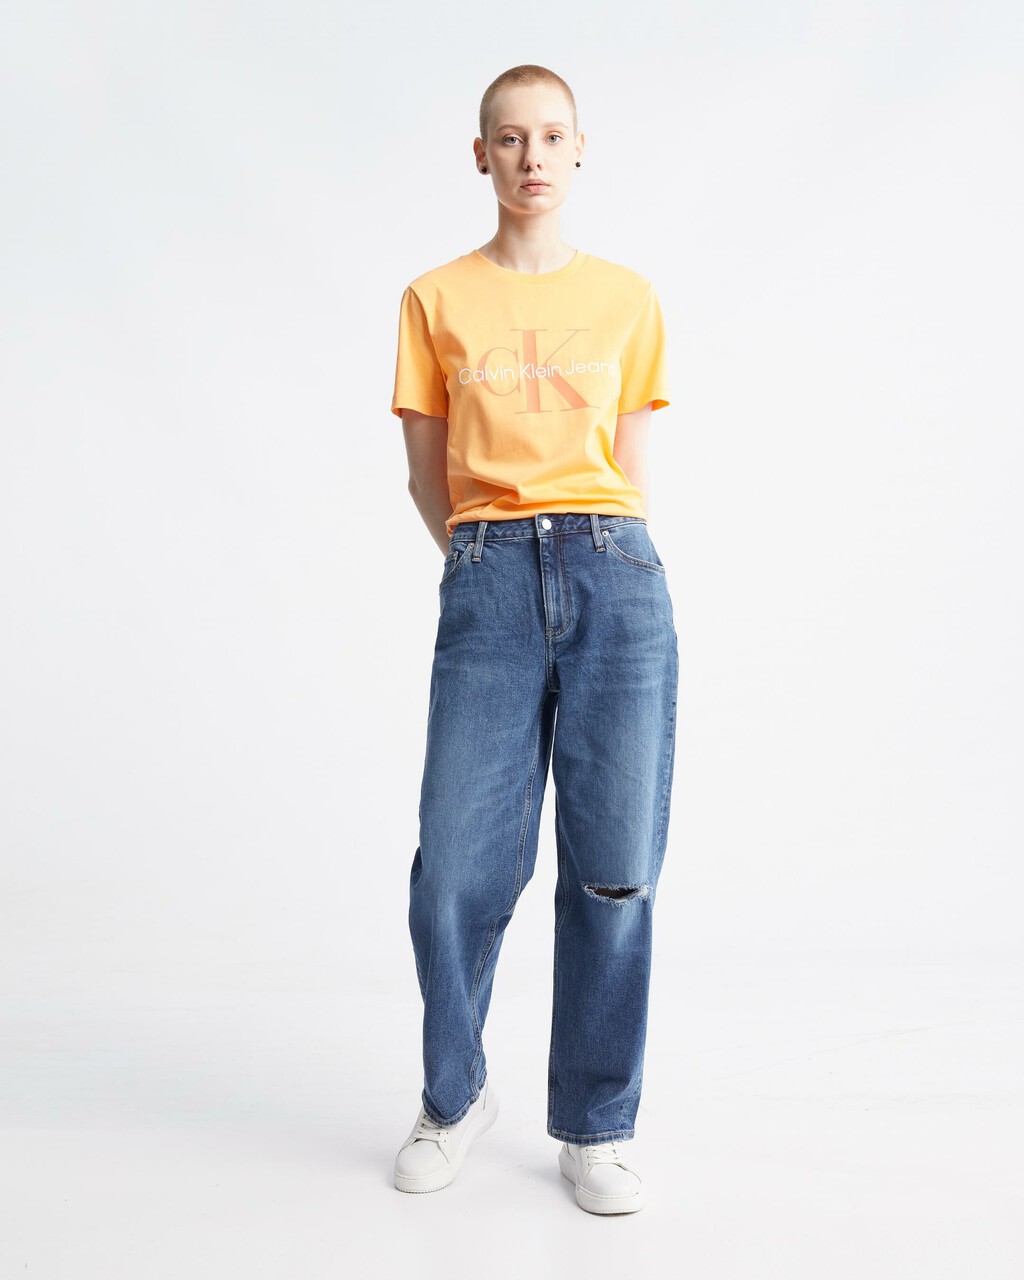 Calvin Klein 有機棉 Monogram 上衣, Crushed Orange, hi-res